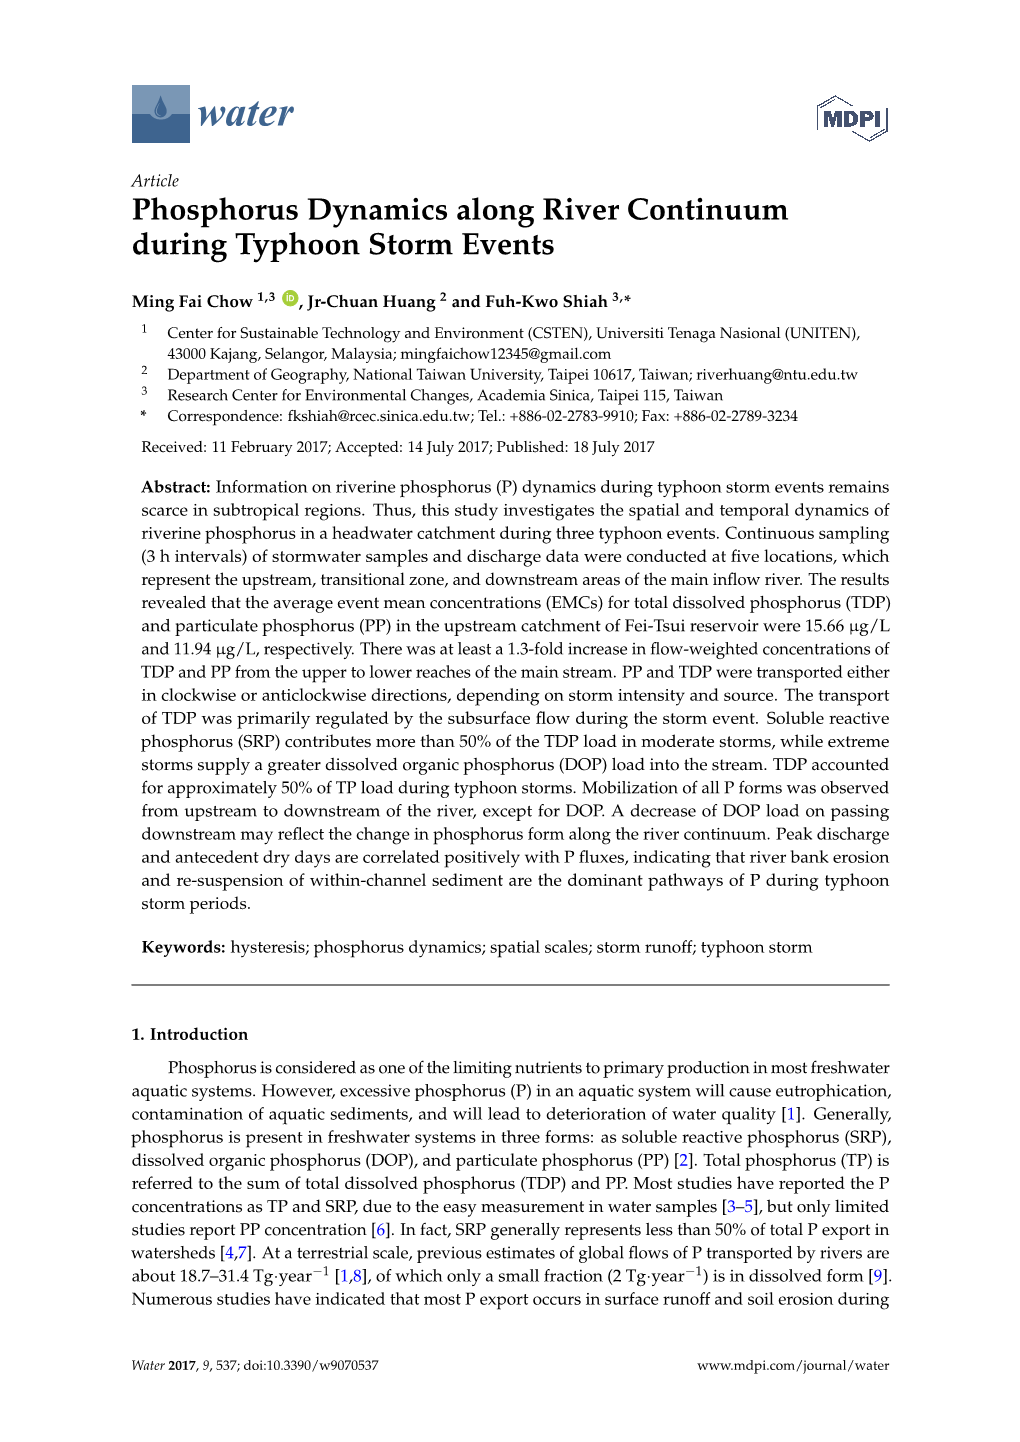 Phosphorus Dynamics Along River Continuum During Typhoon Storm Events